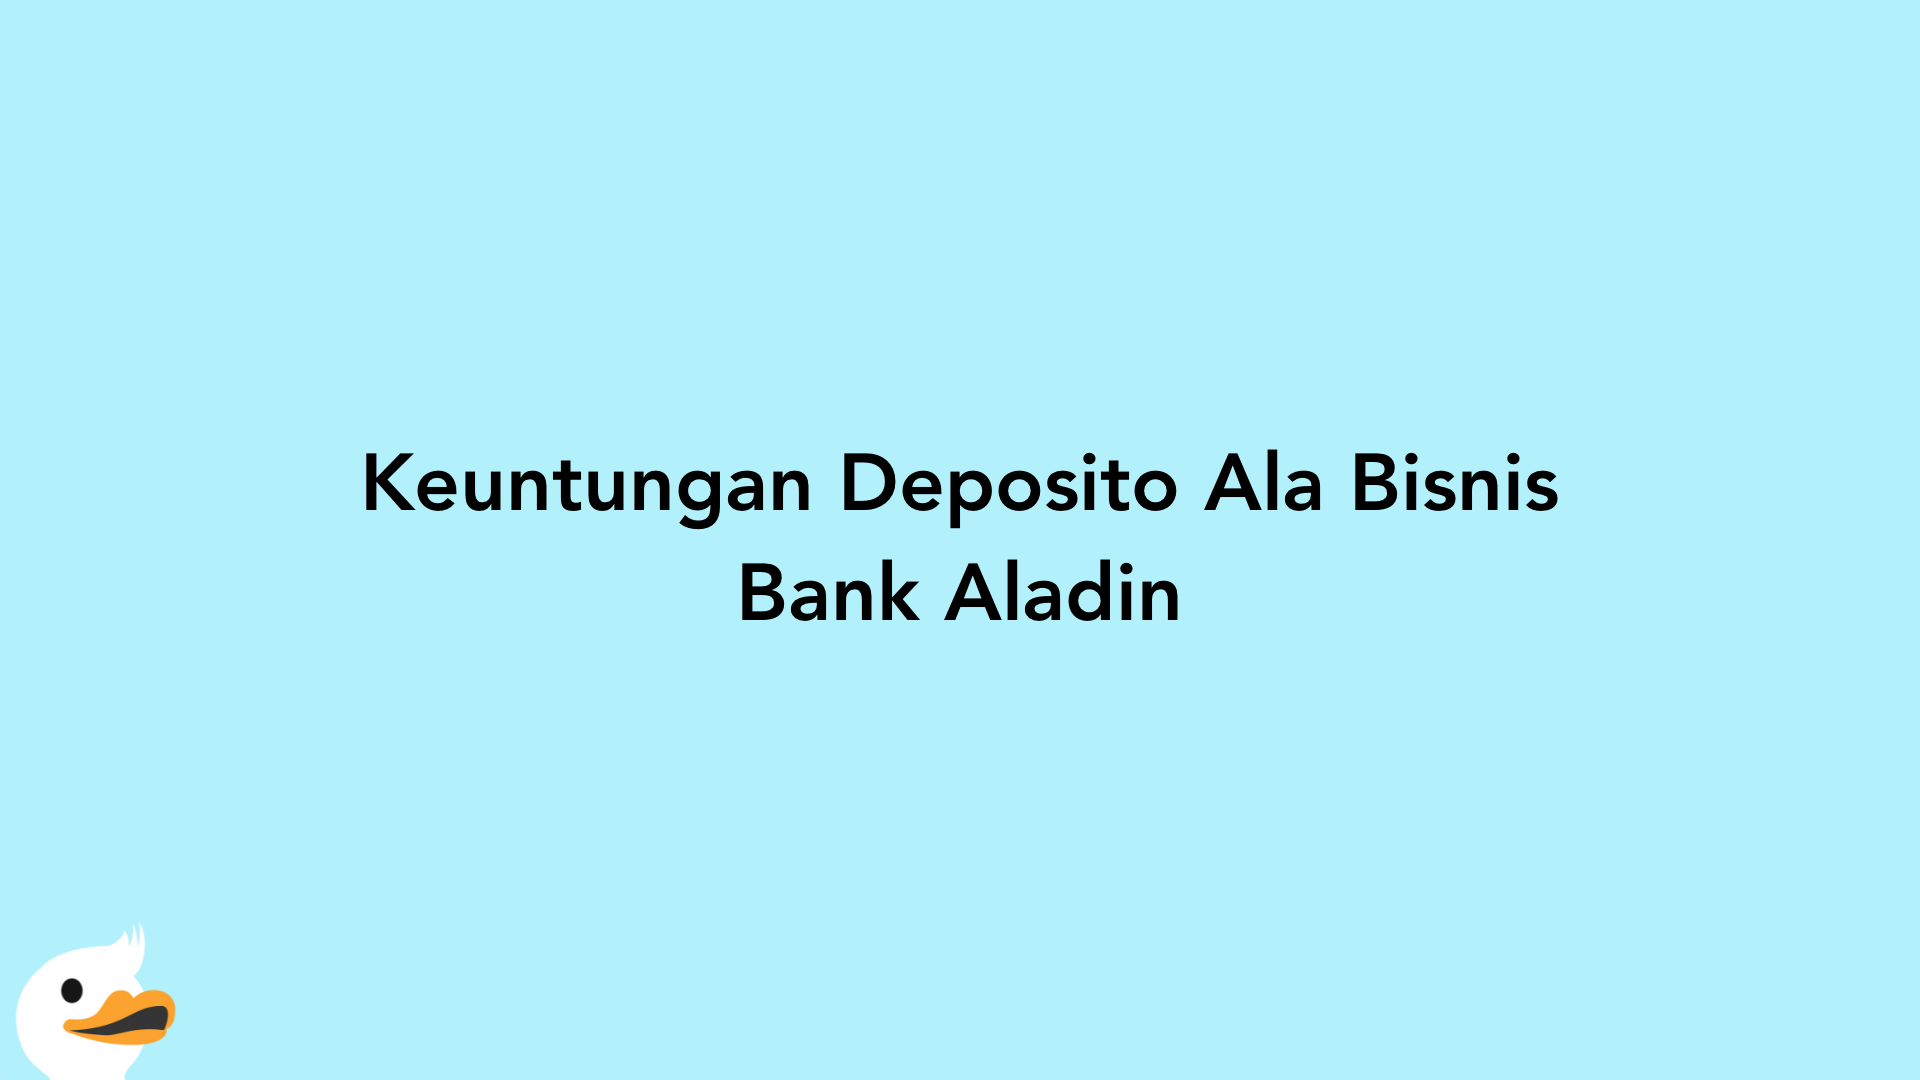 Keuntungan Deposito Ala Bisnis Bank Aladin